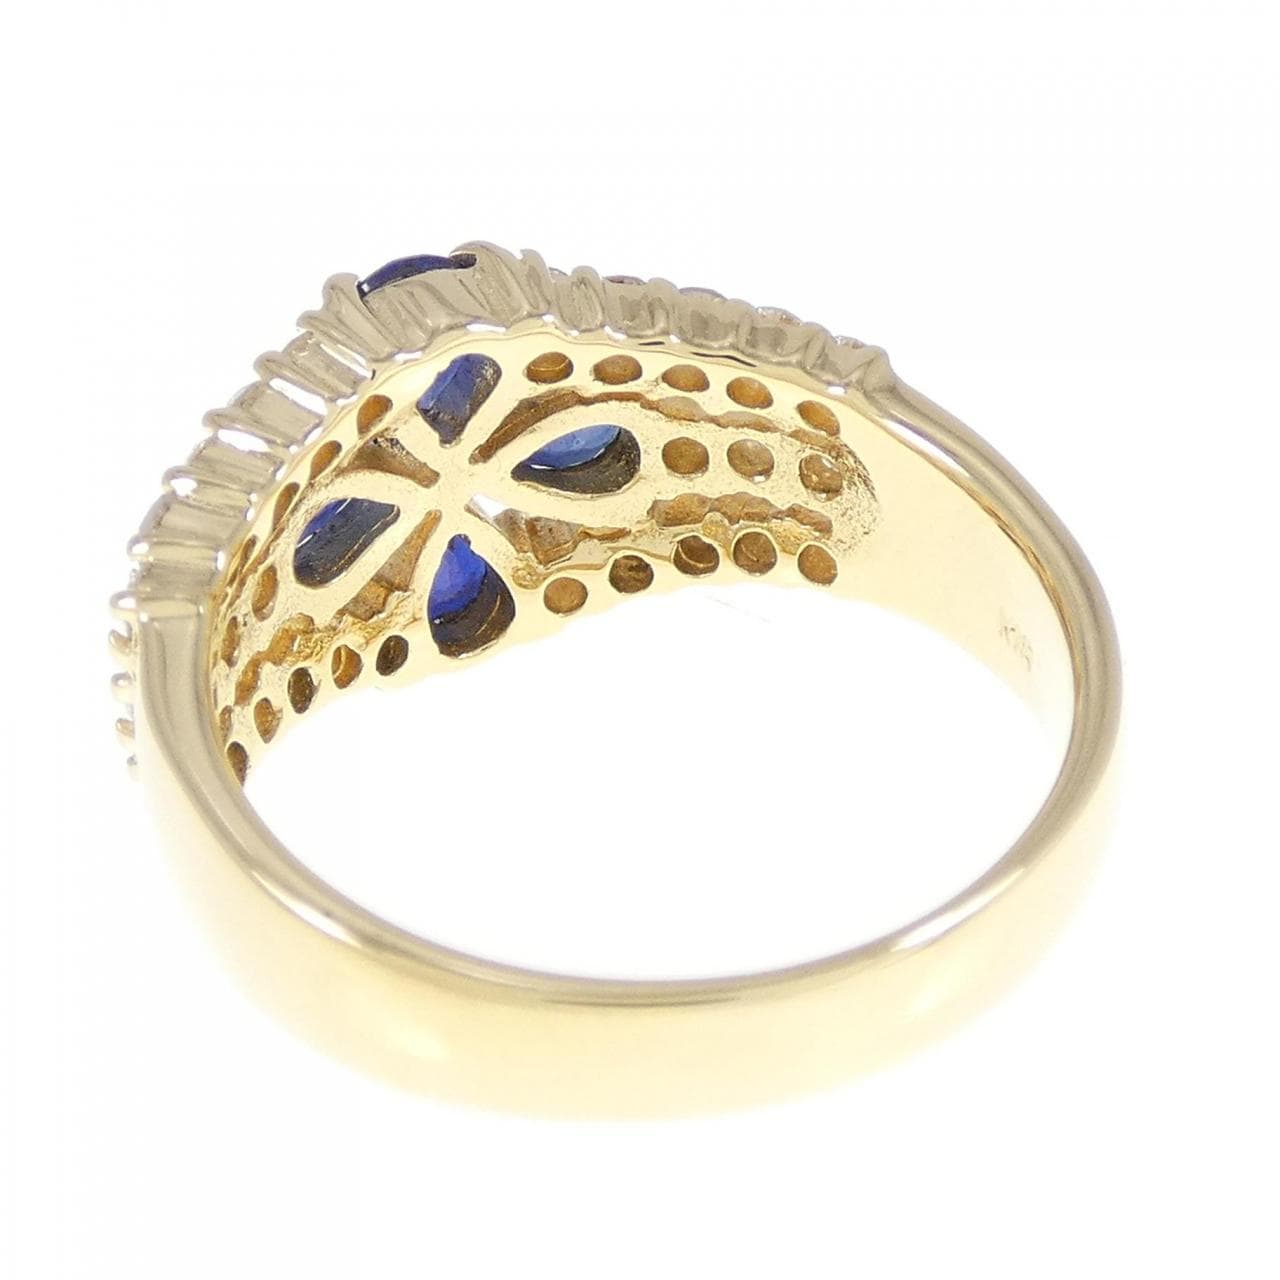 K18YG Flower Sapphire Ring 1.13CT